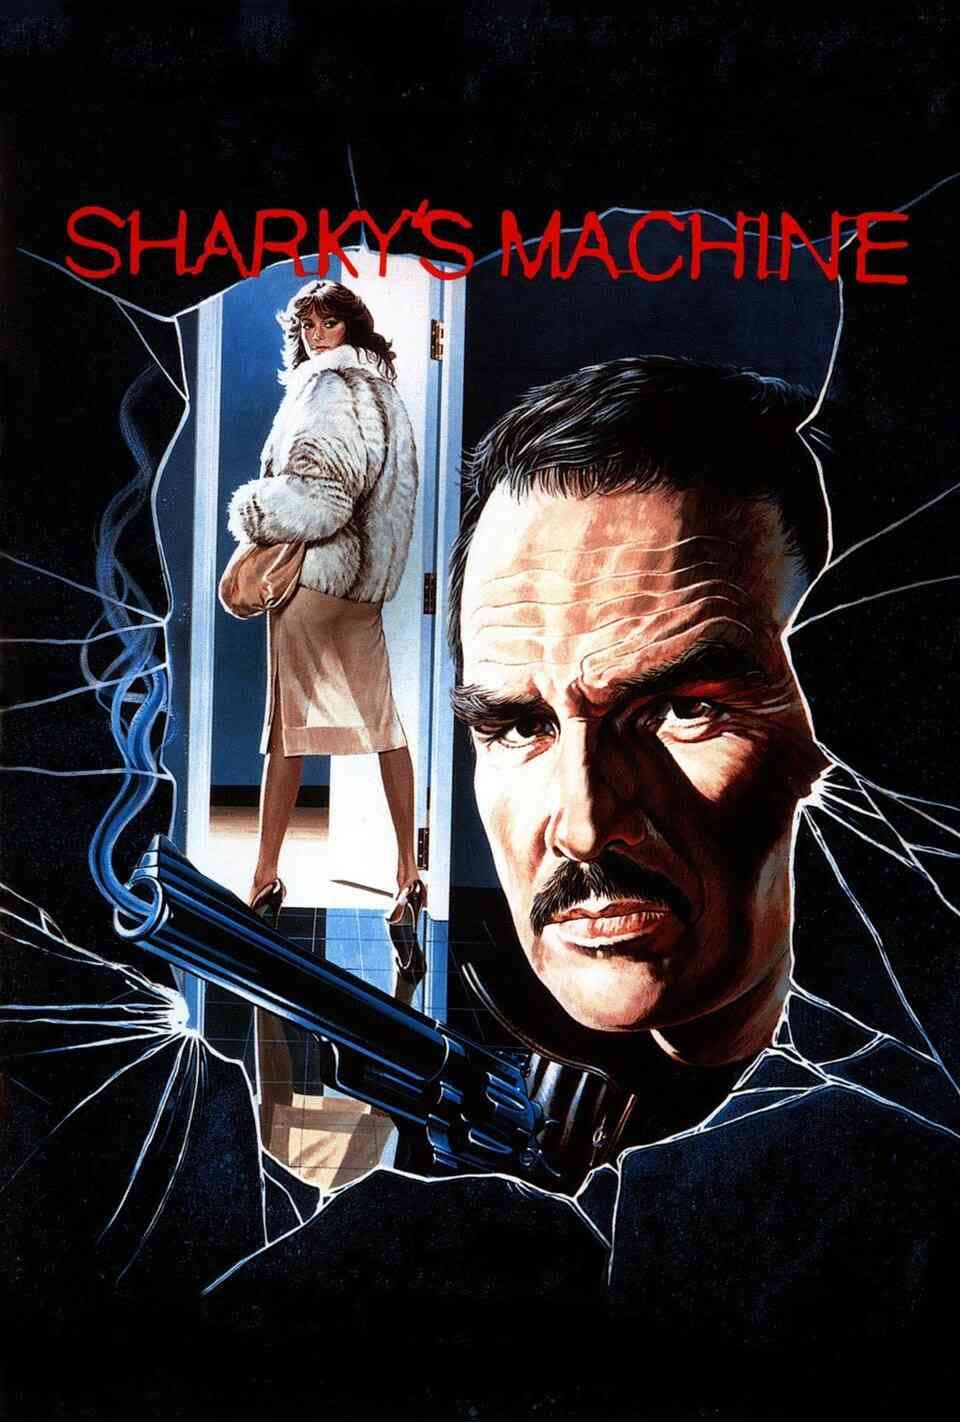 Read Sharky's Machine screenplay (poster)